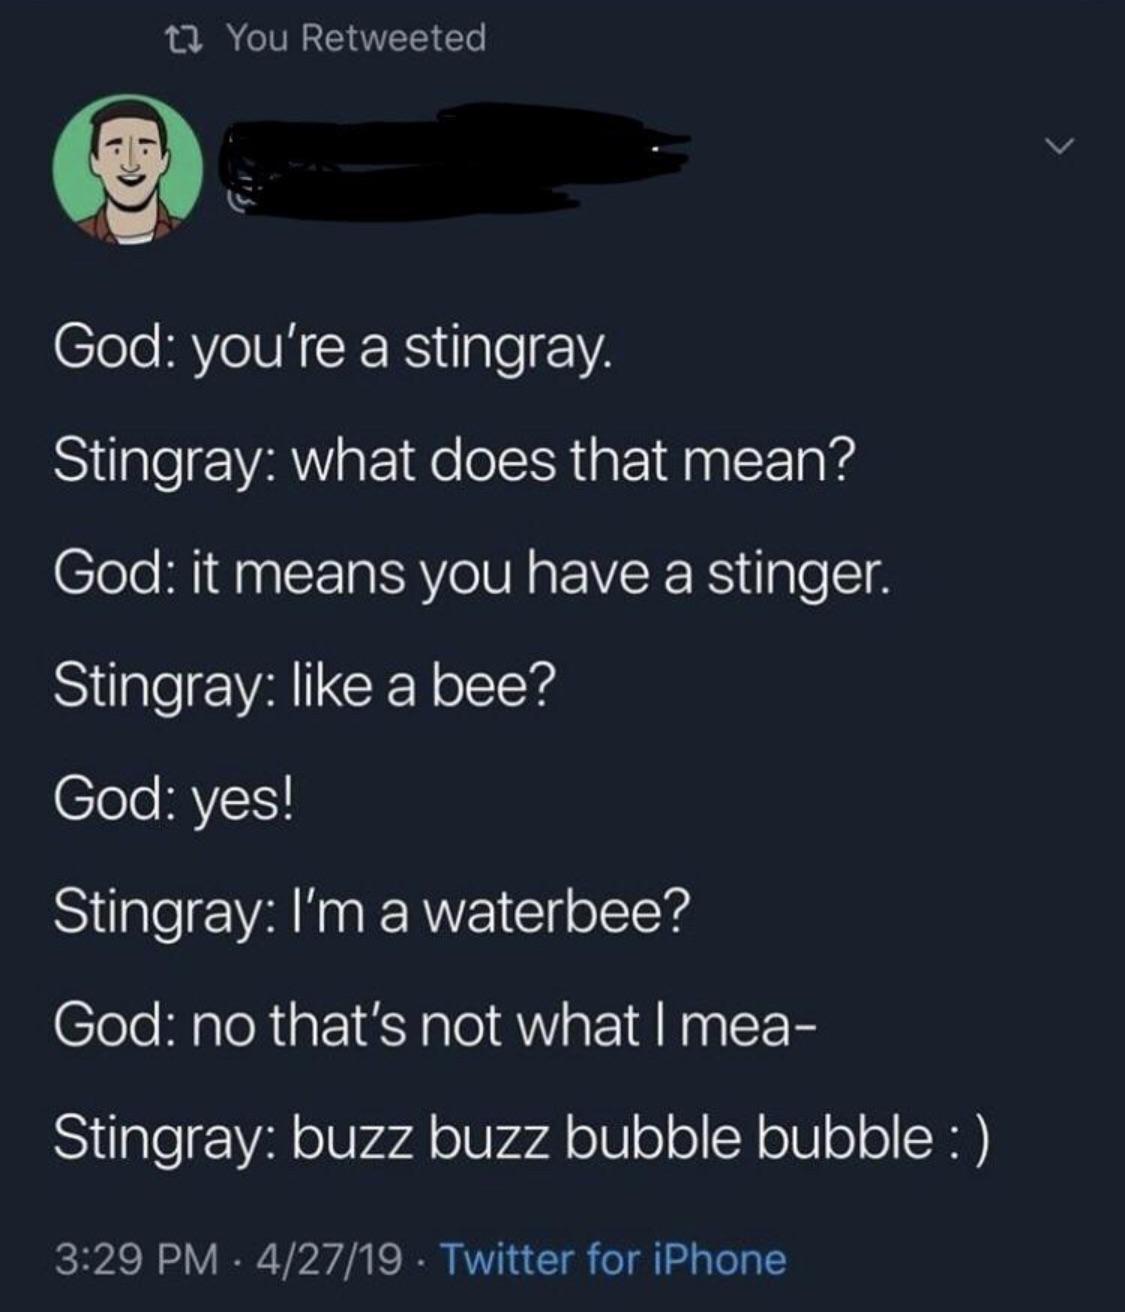 Bubble bubble buzz buzz